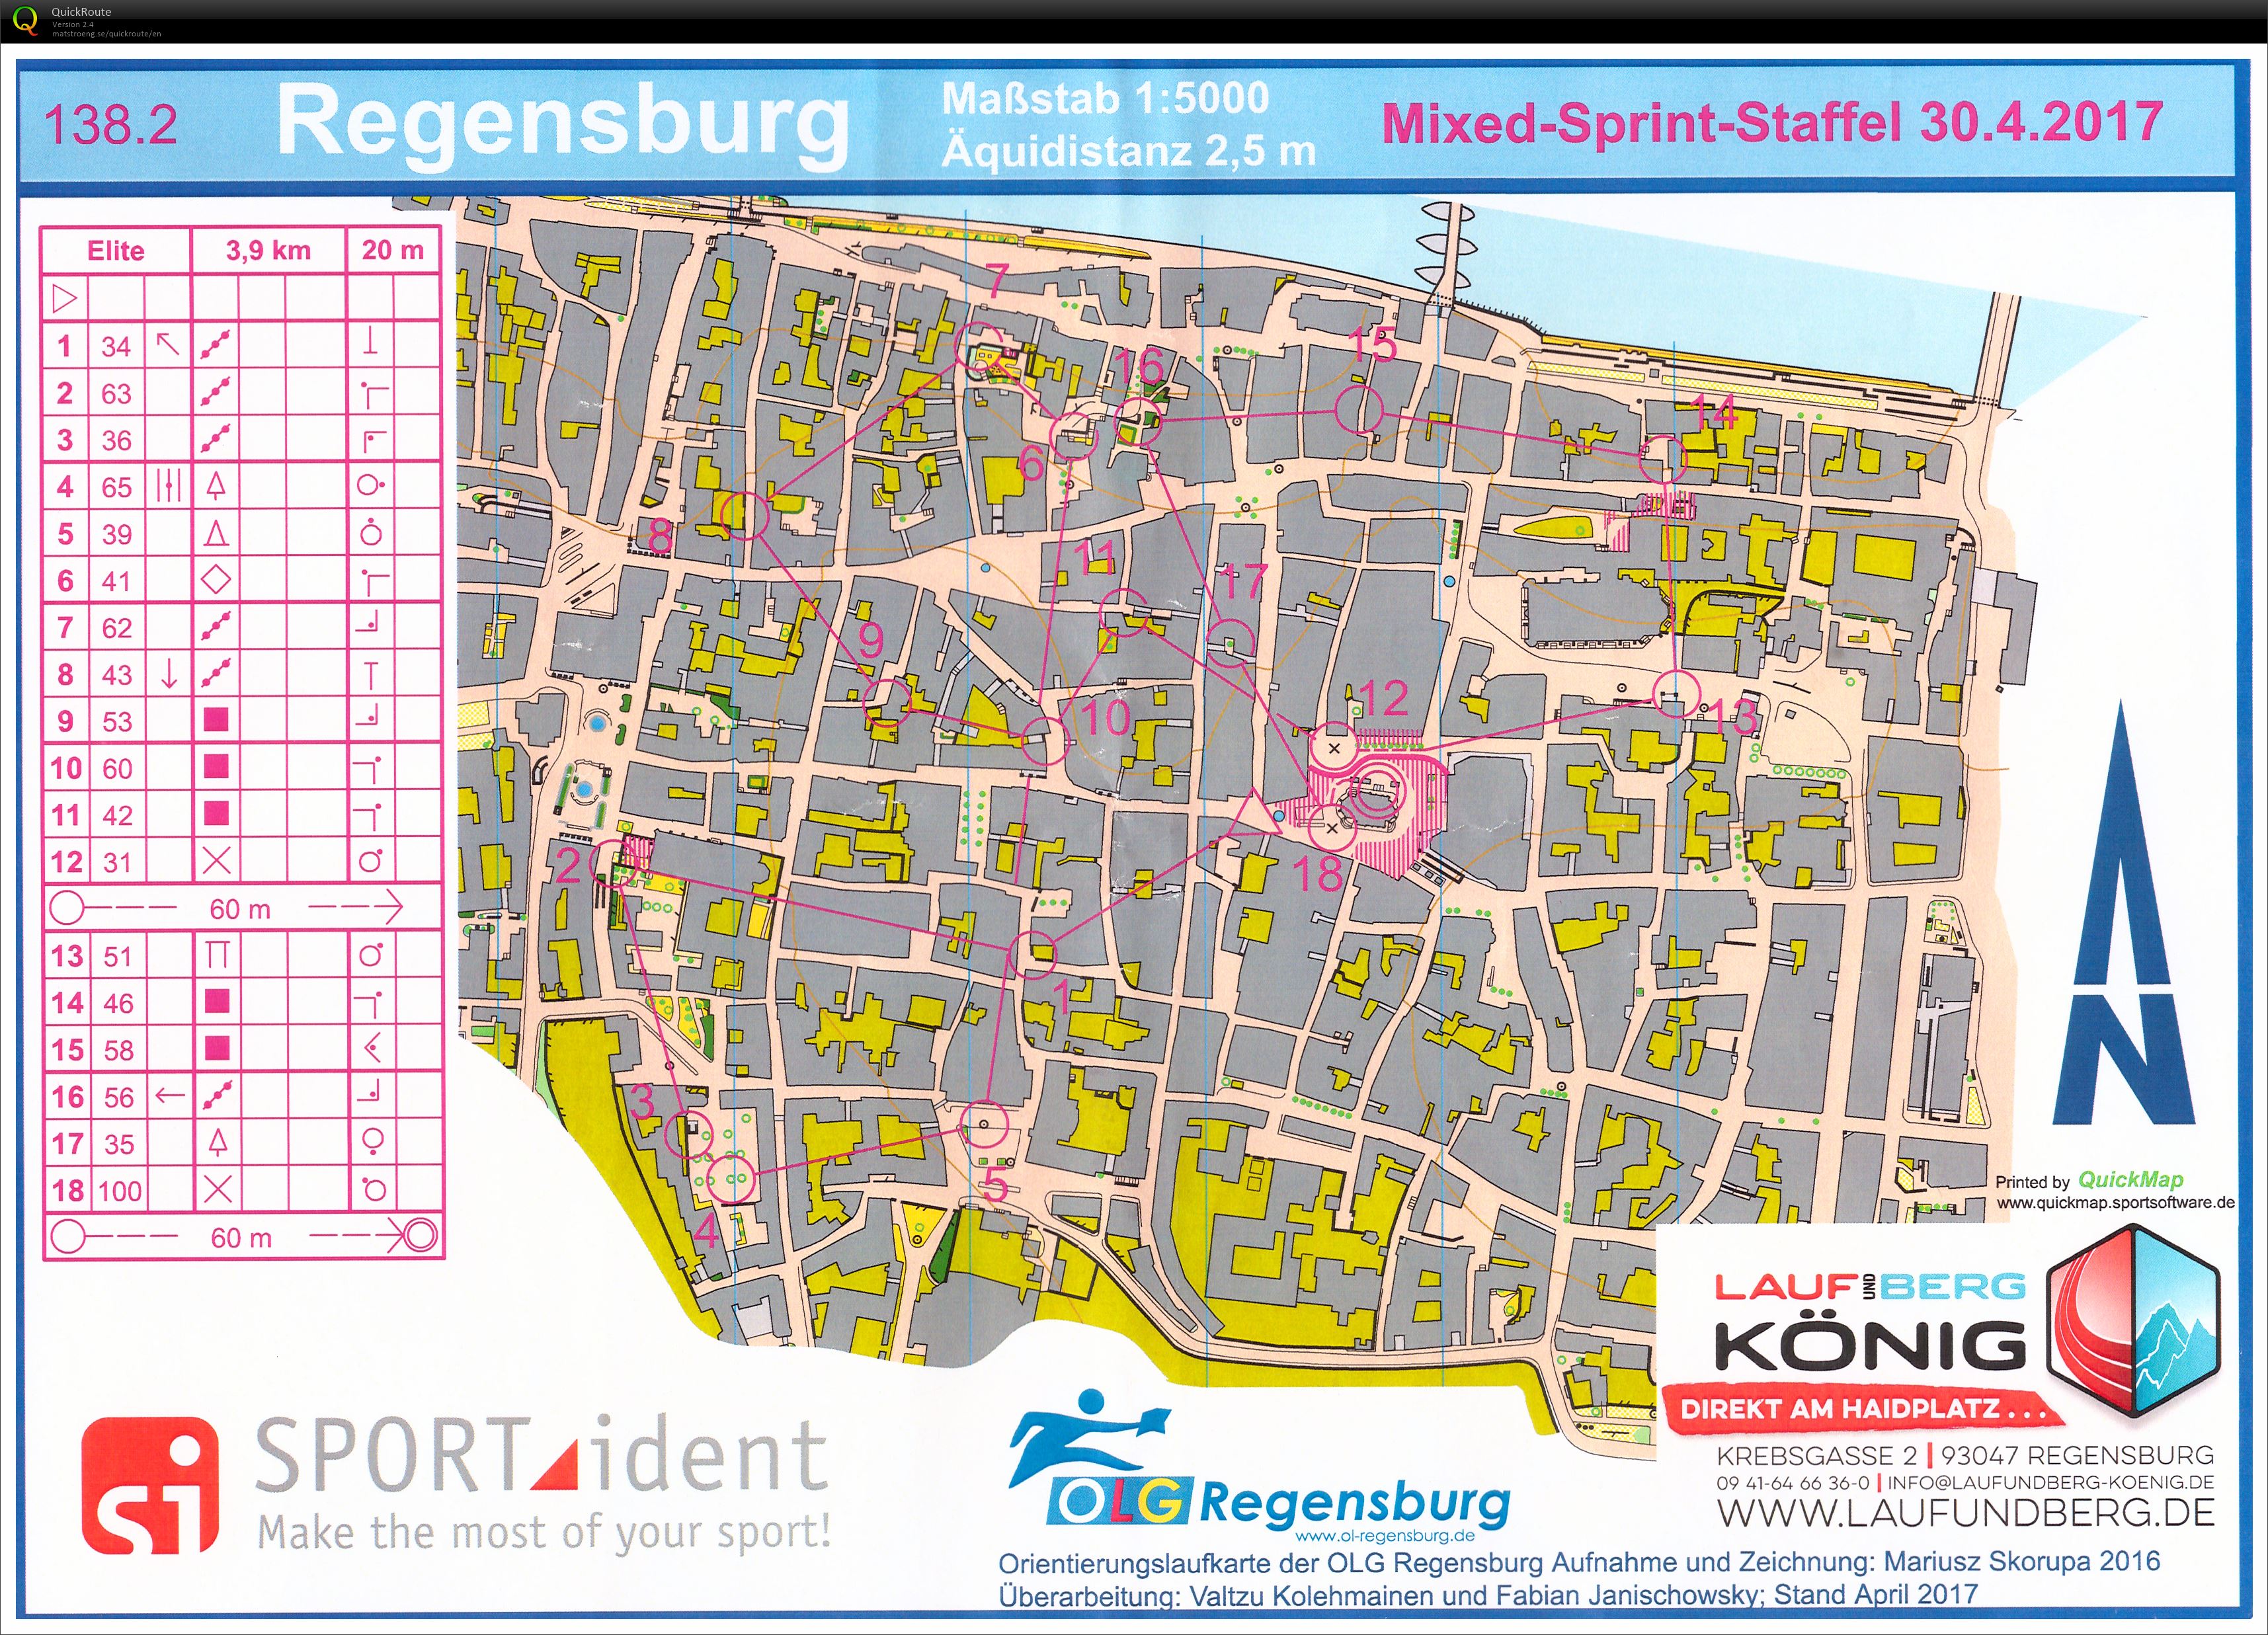 Sprint relay Regensburg (30/04/2017)